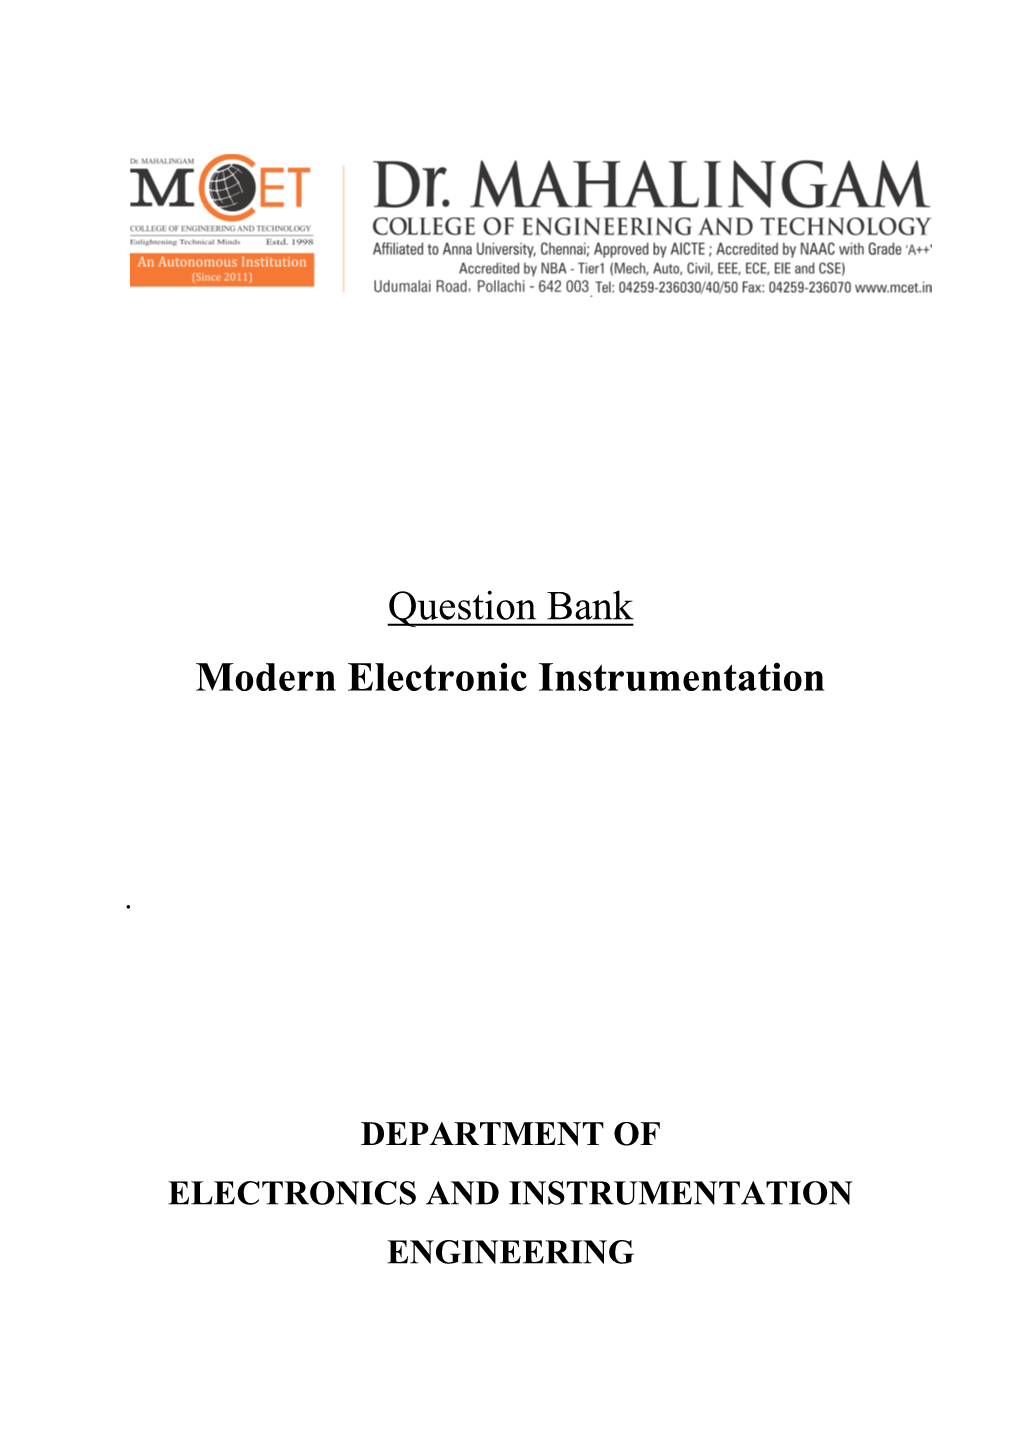 Question Bank Modern Electronic Instrumentation